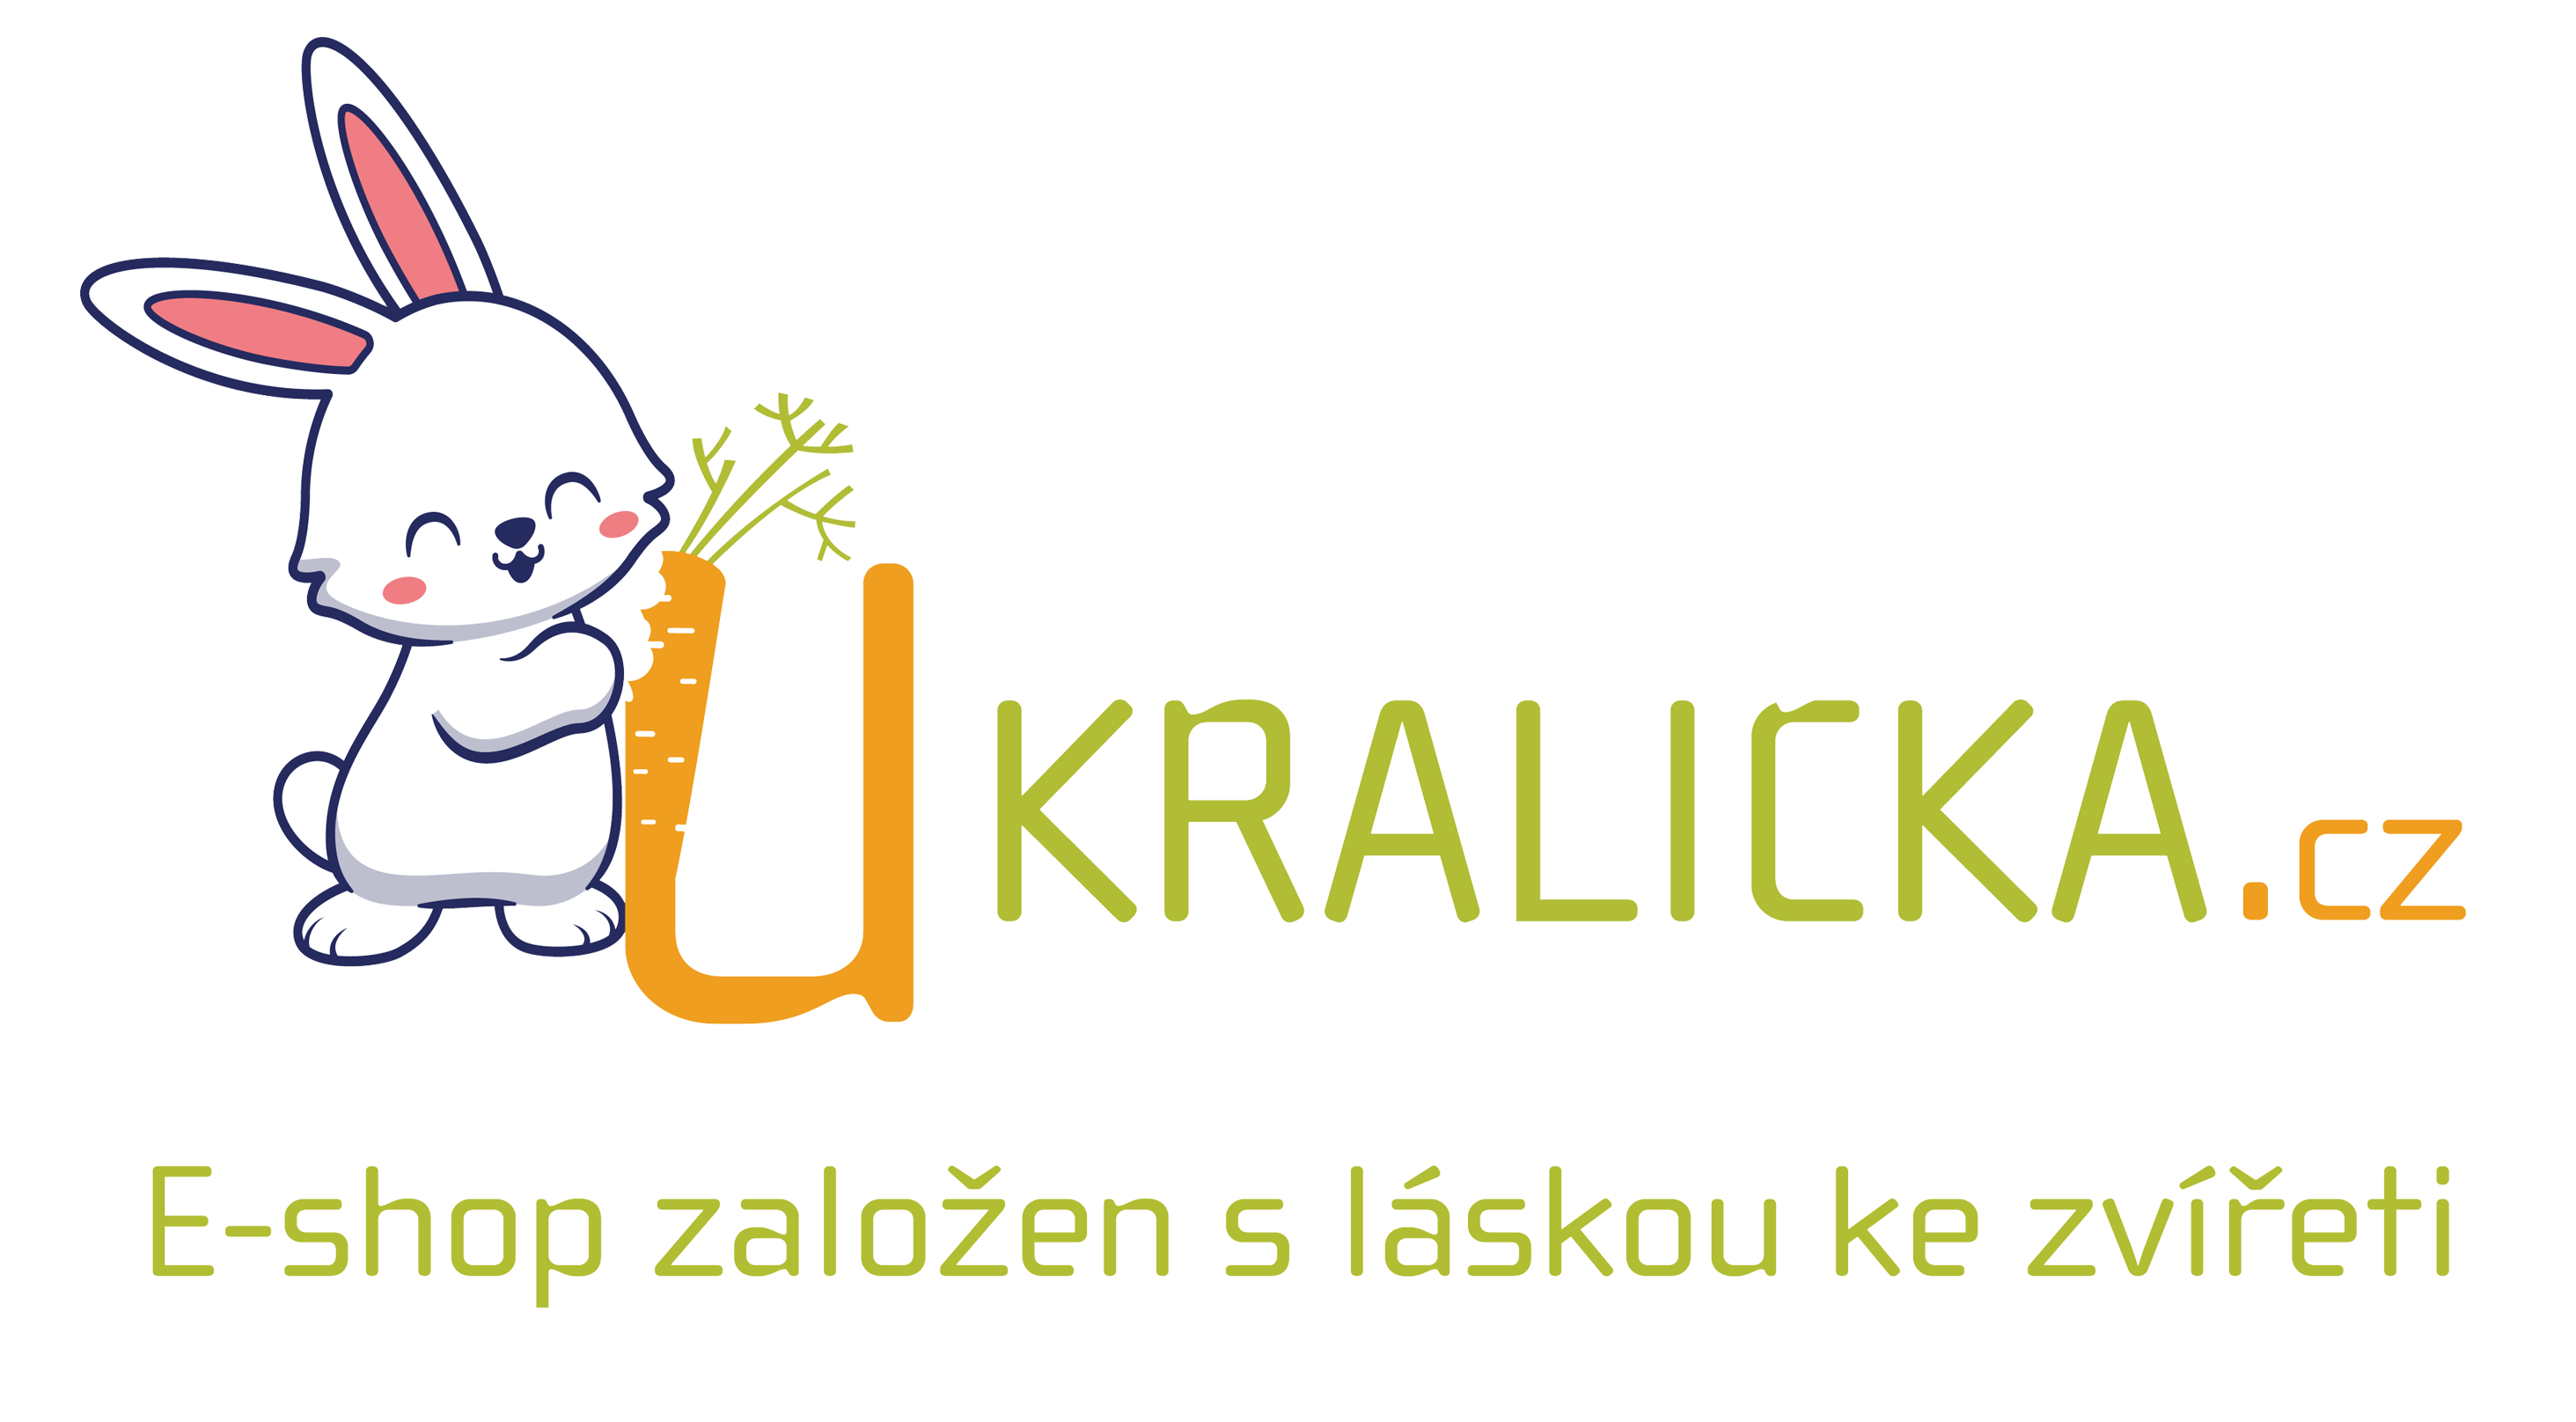 Ukralicka.cz